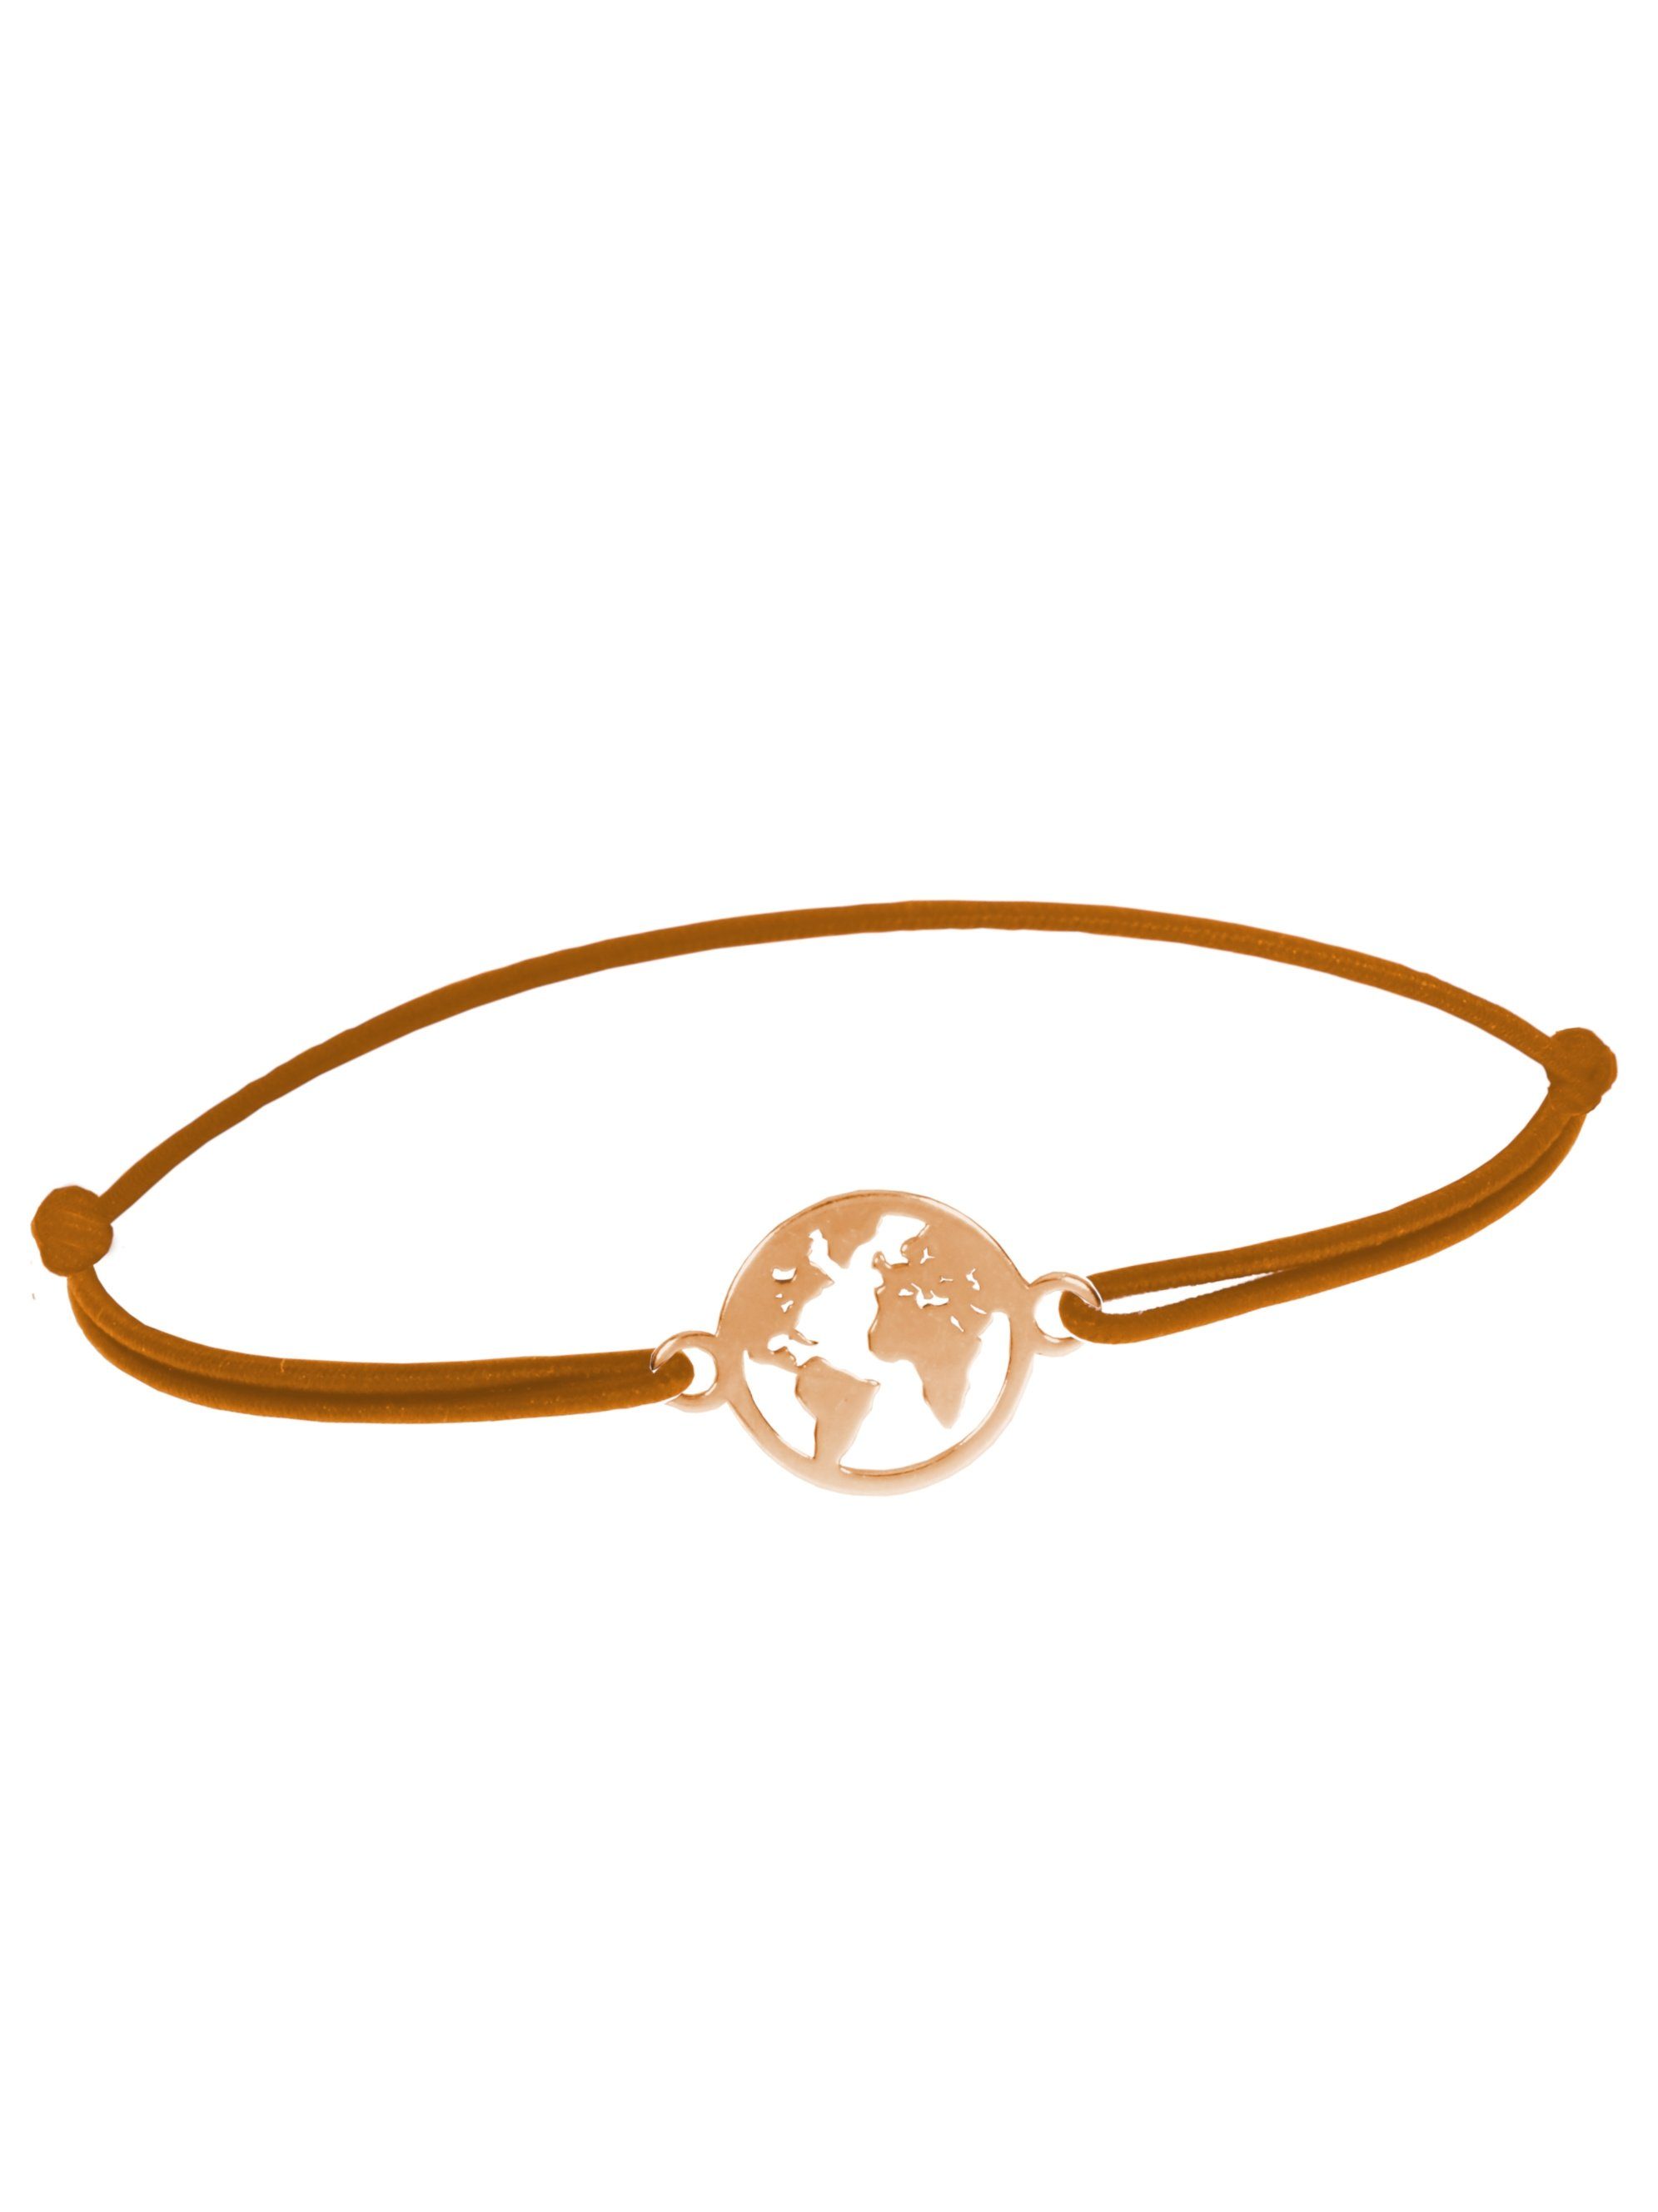 Damen Schmuck Adelia´s Armband Weltkugel 925 Silber Armband, Weltkugel